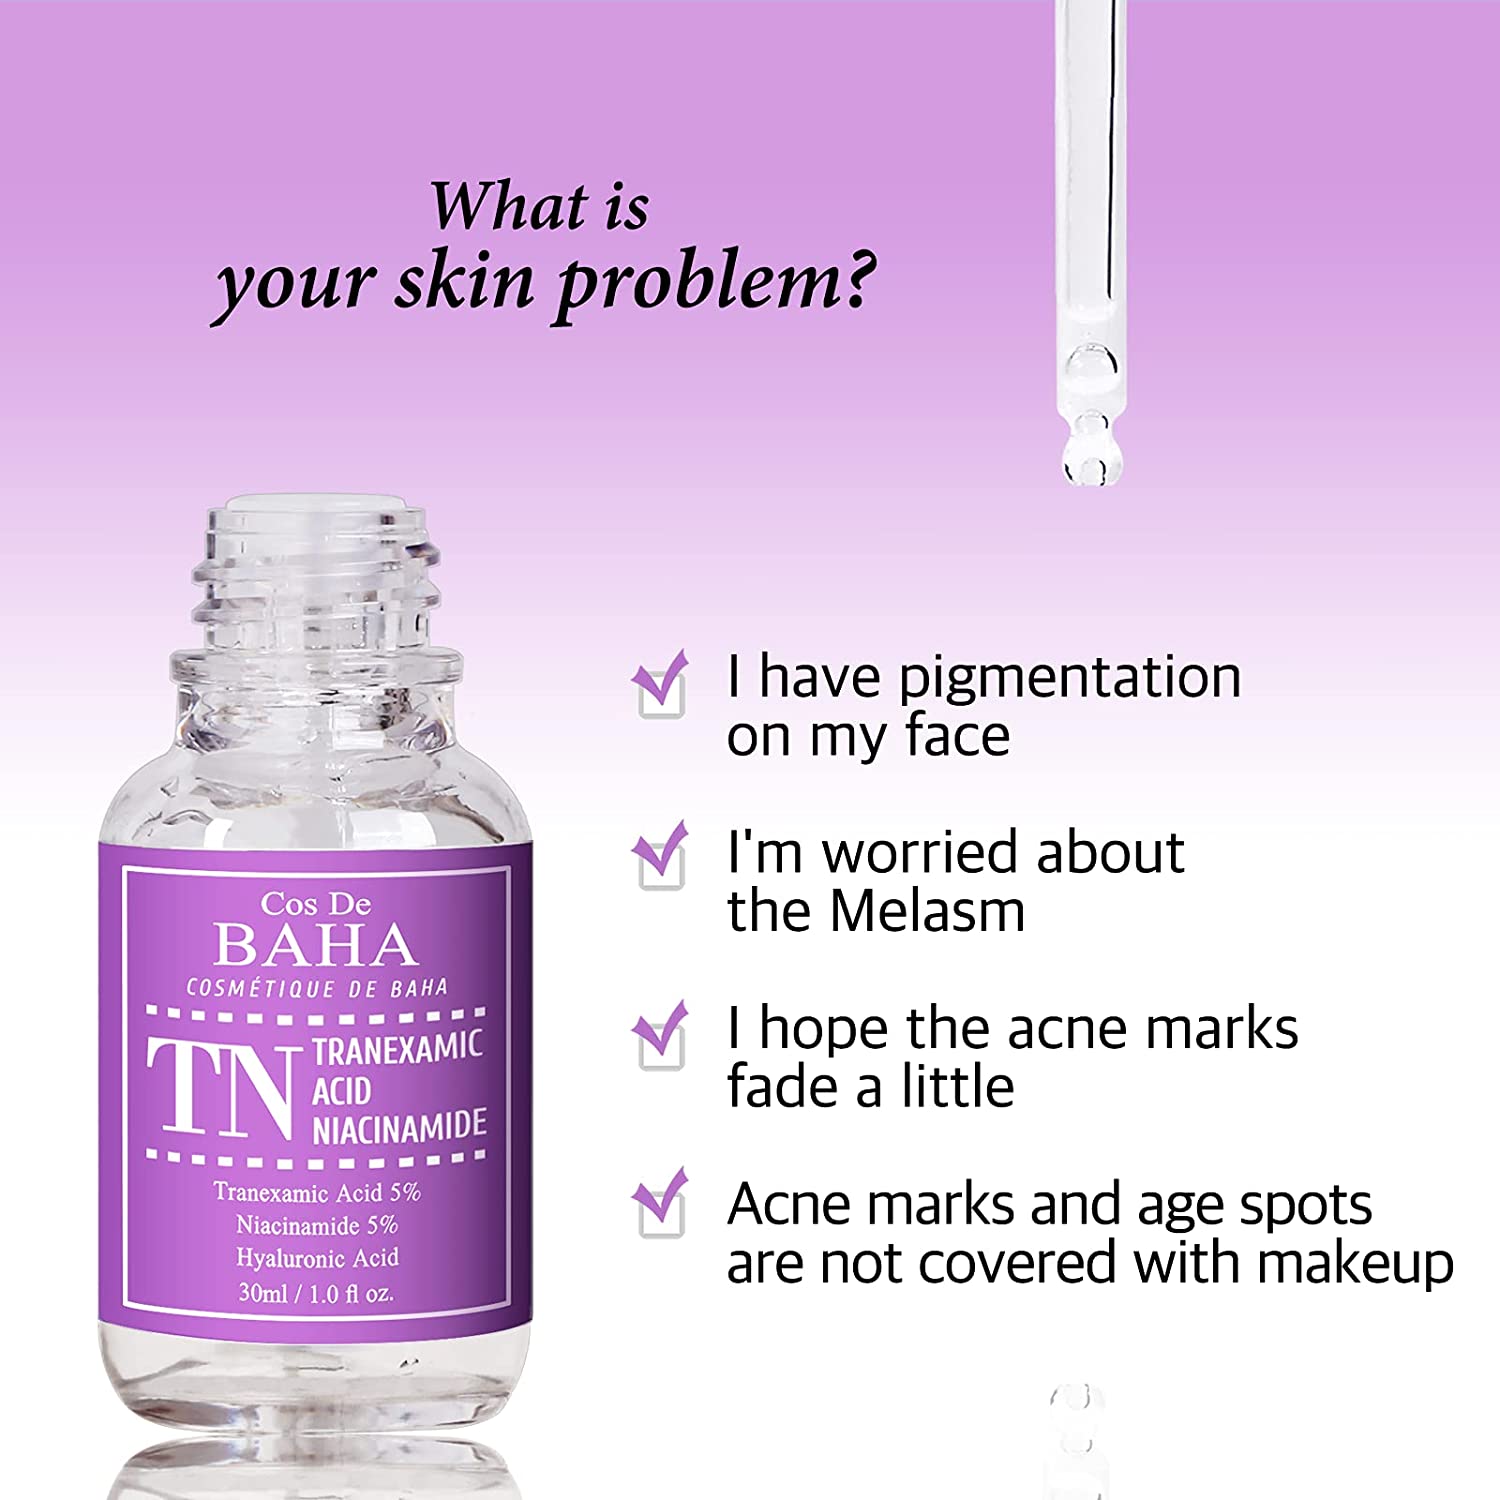 Cos de BAHA Tranexamic Acid (TN) Facial Serum Dark Spot Corrector 30ml